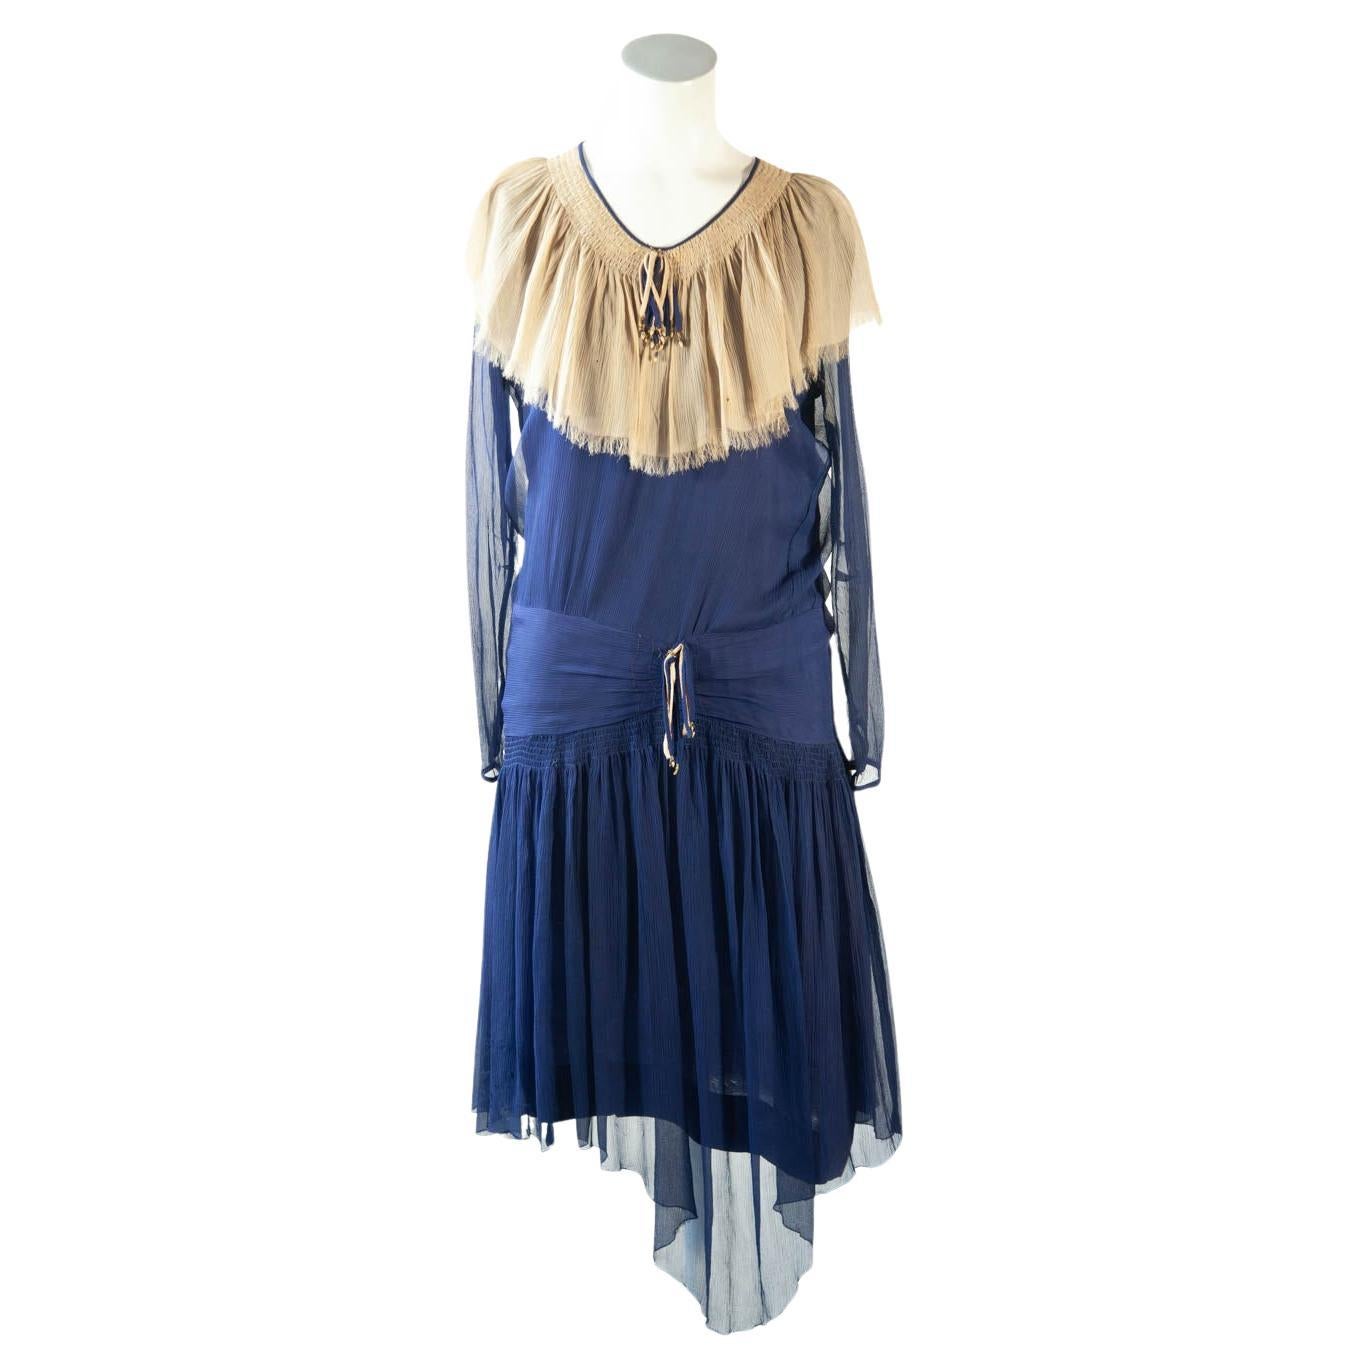 Very Vintage Original 1920s Silk Chiffon Blue Dress For Sale